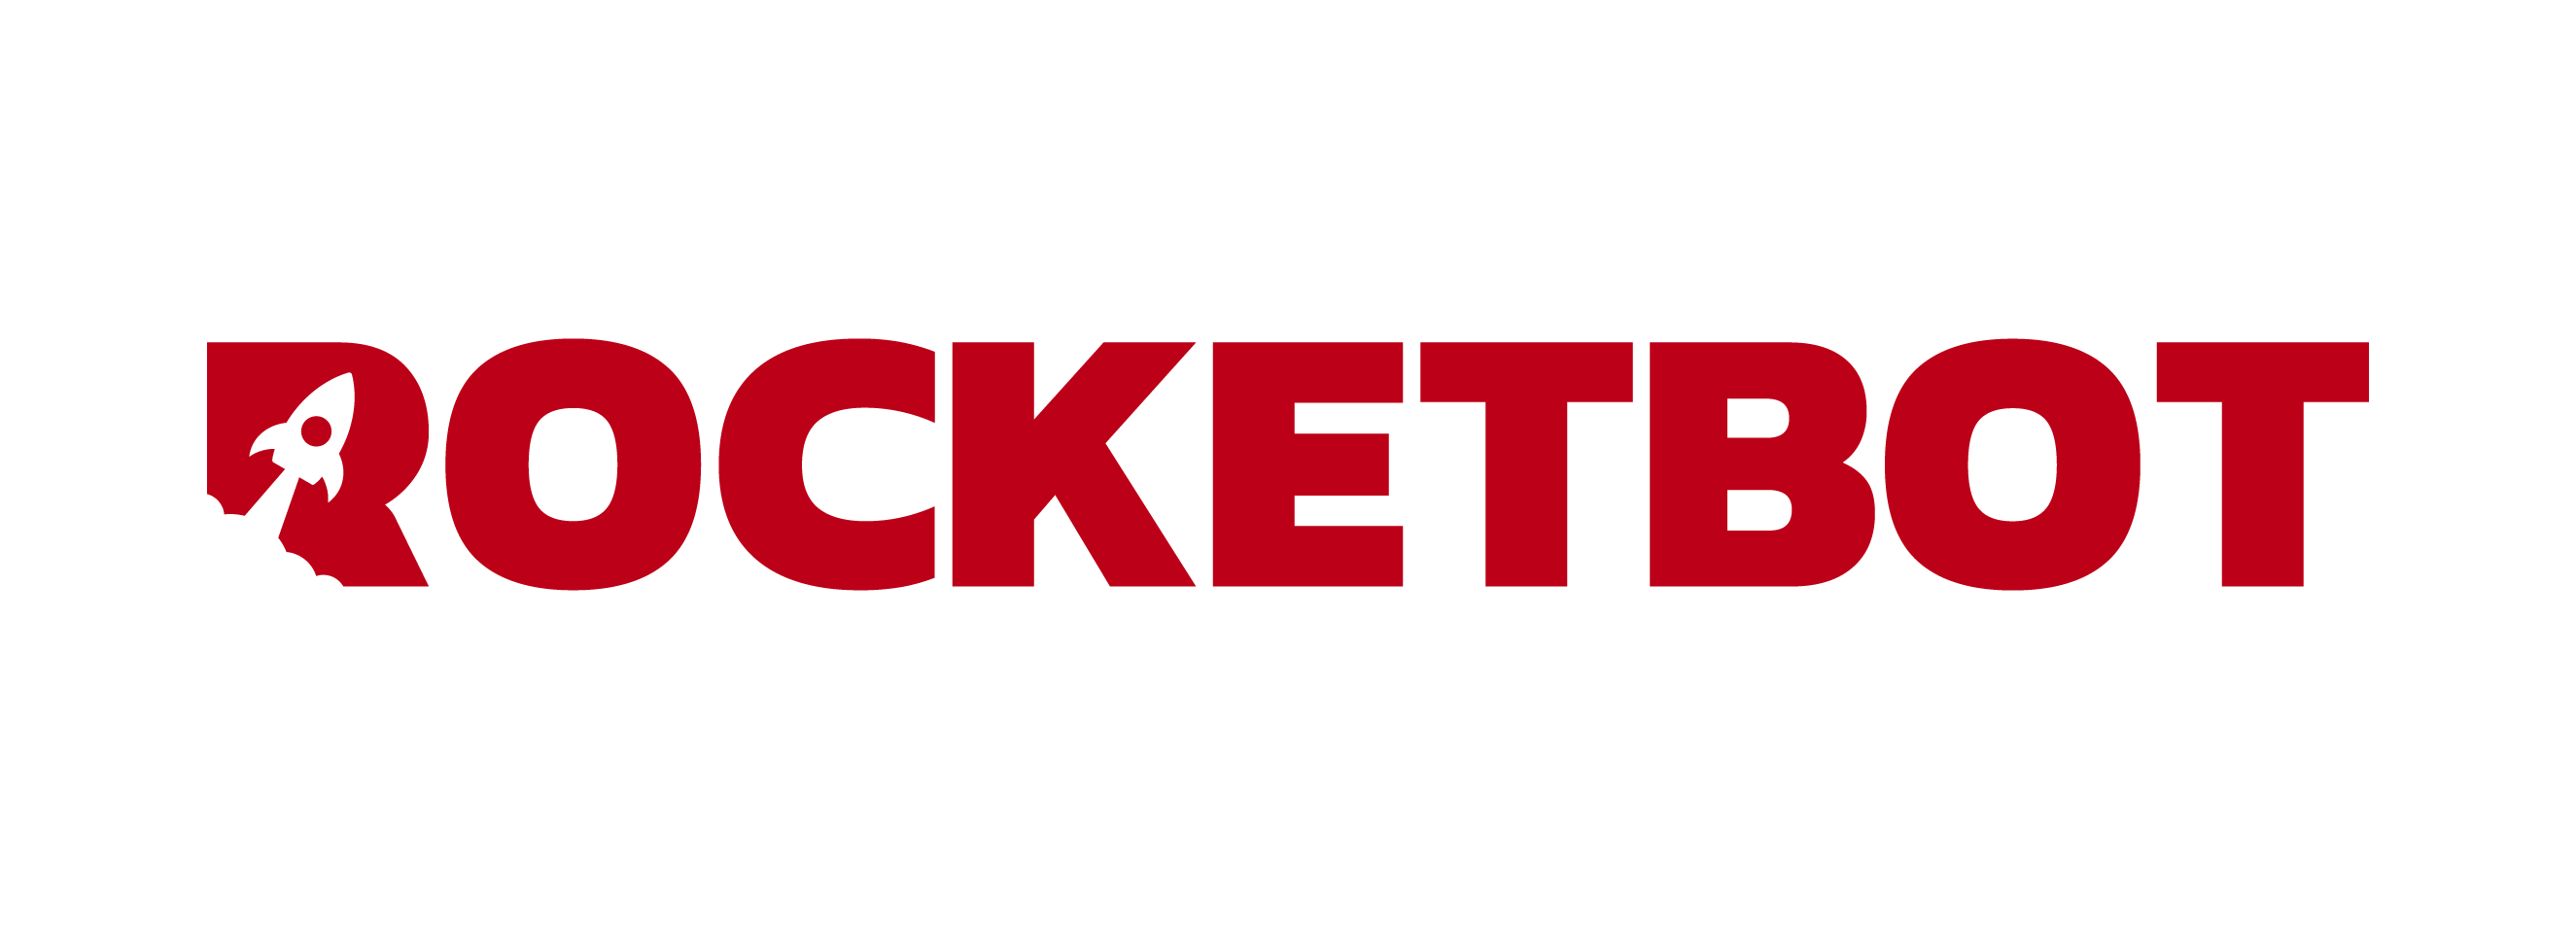 Rocketbot